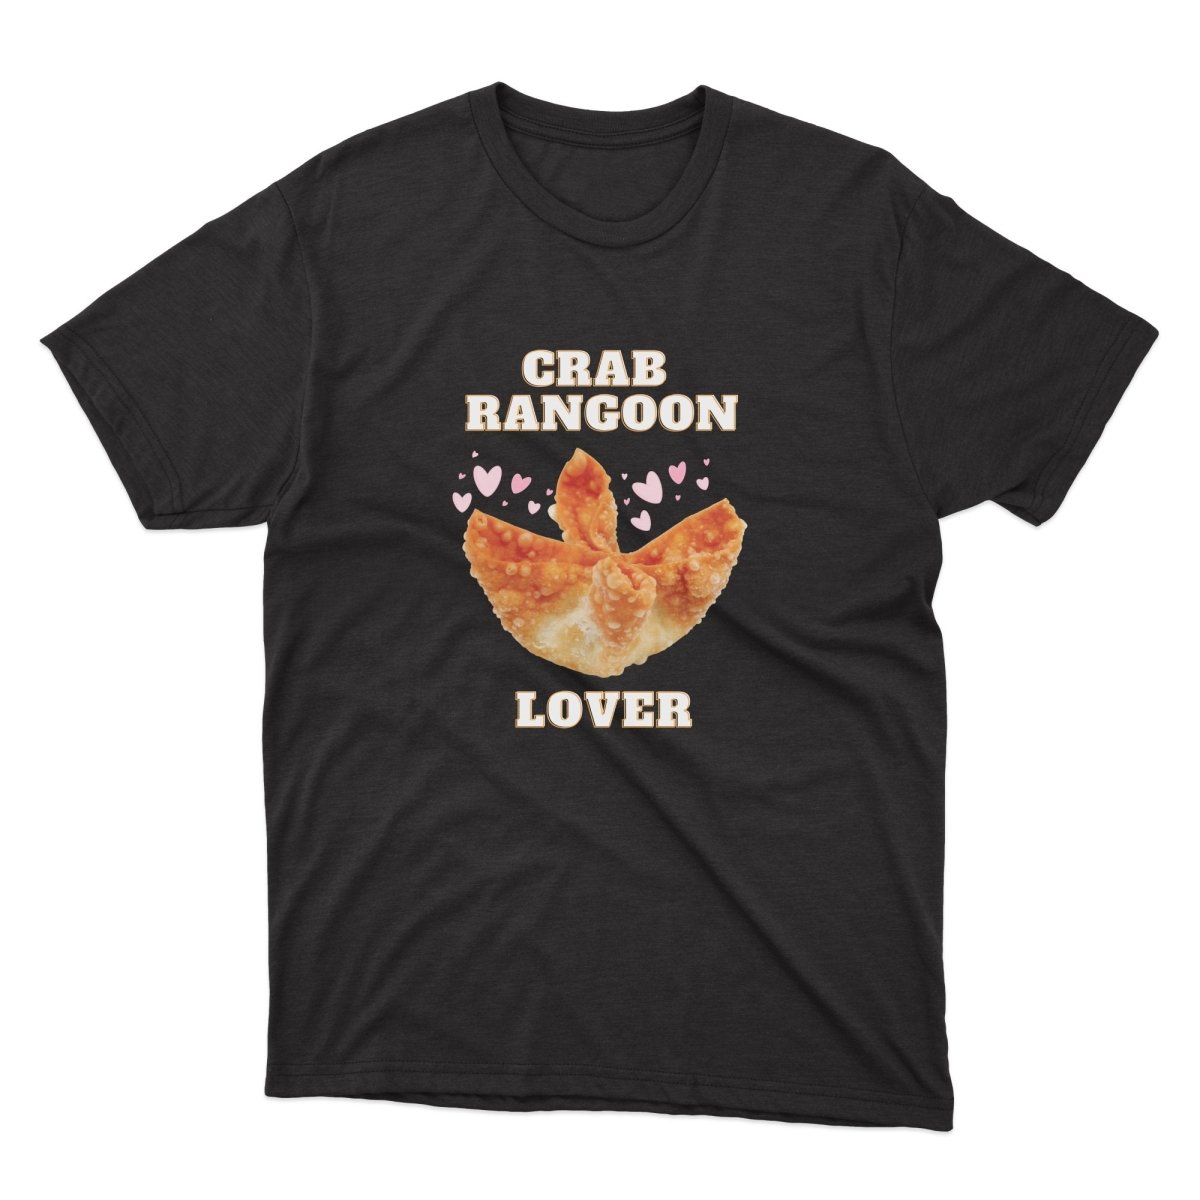 Crab Rangoon Lover Shirt - stickerbullCrab Rangoon Lover ShirtShirtsPrintifystickerbull32655587608366580512BlackSa black t - shirt that says crab rangoon lover